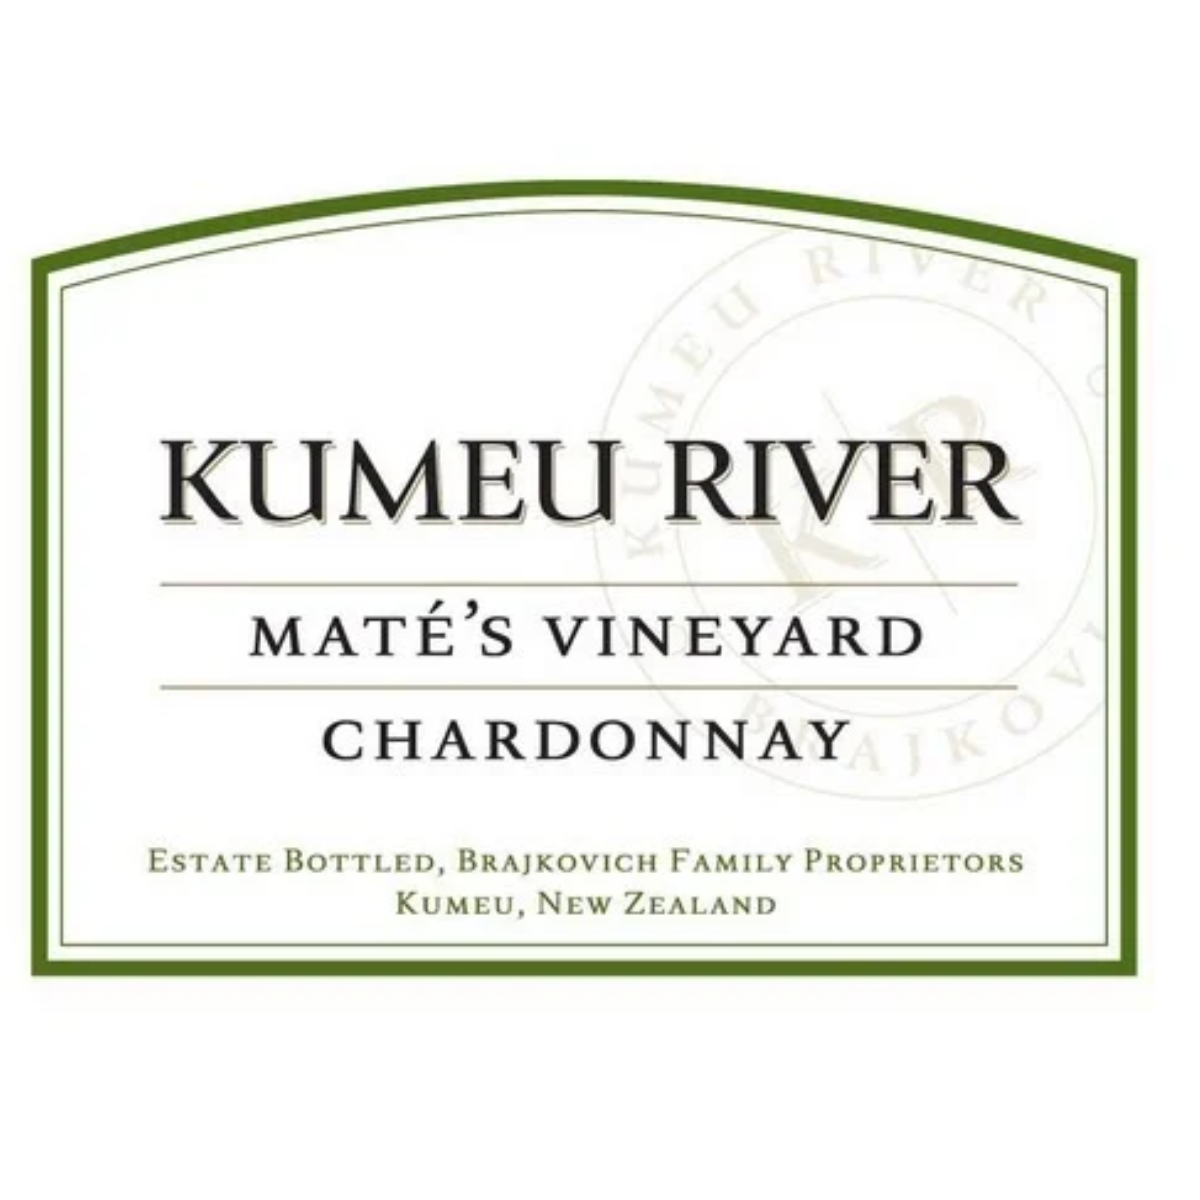 Kumeu River Mate's Vineyard Chardonnay 2021 VVN